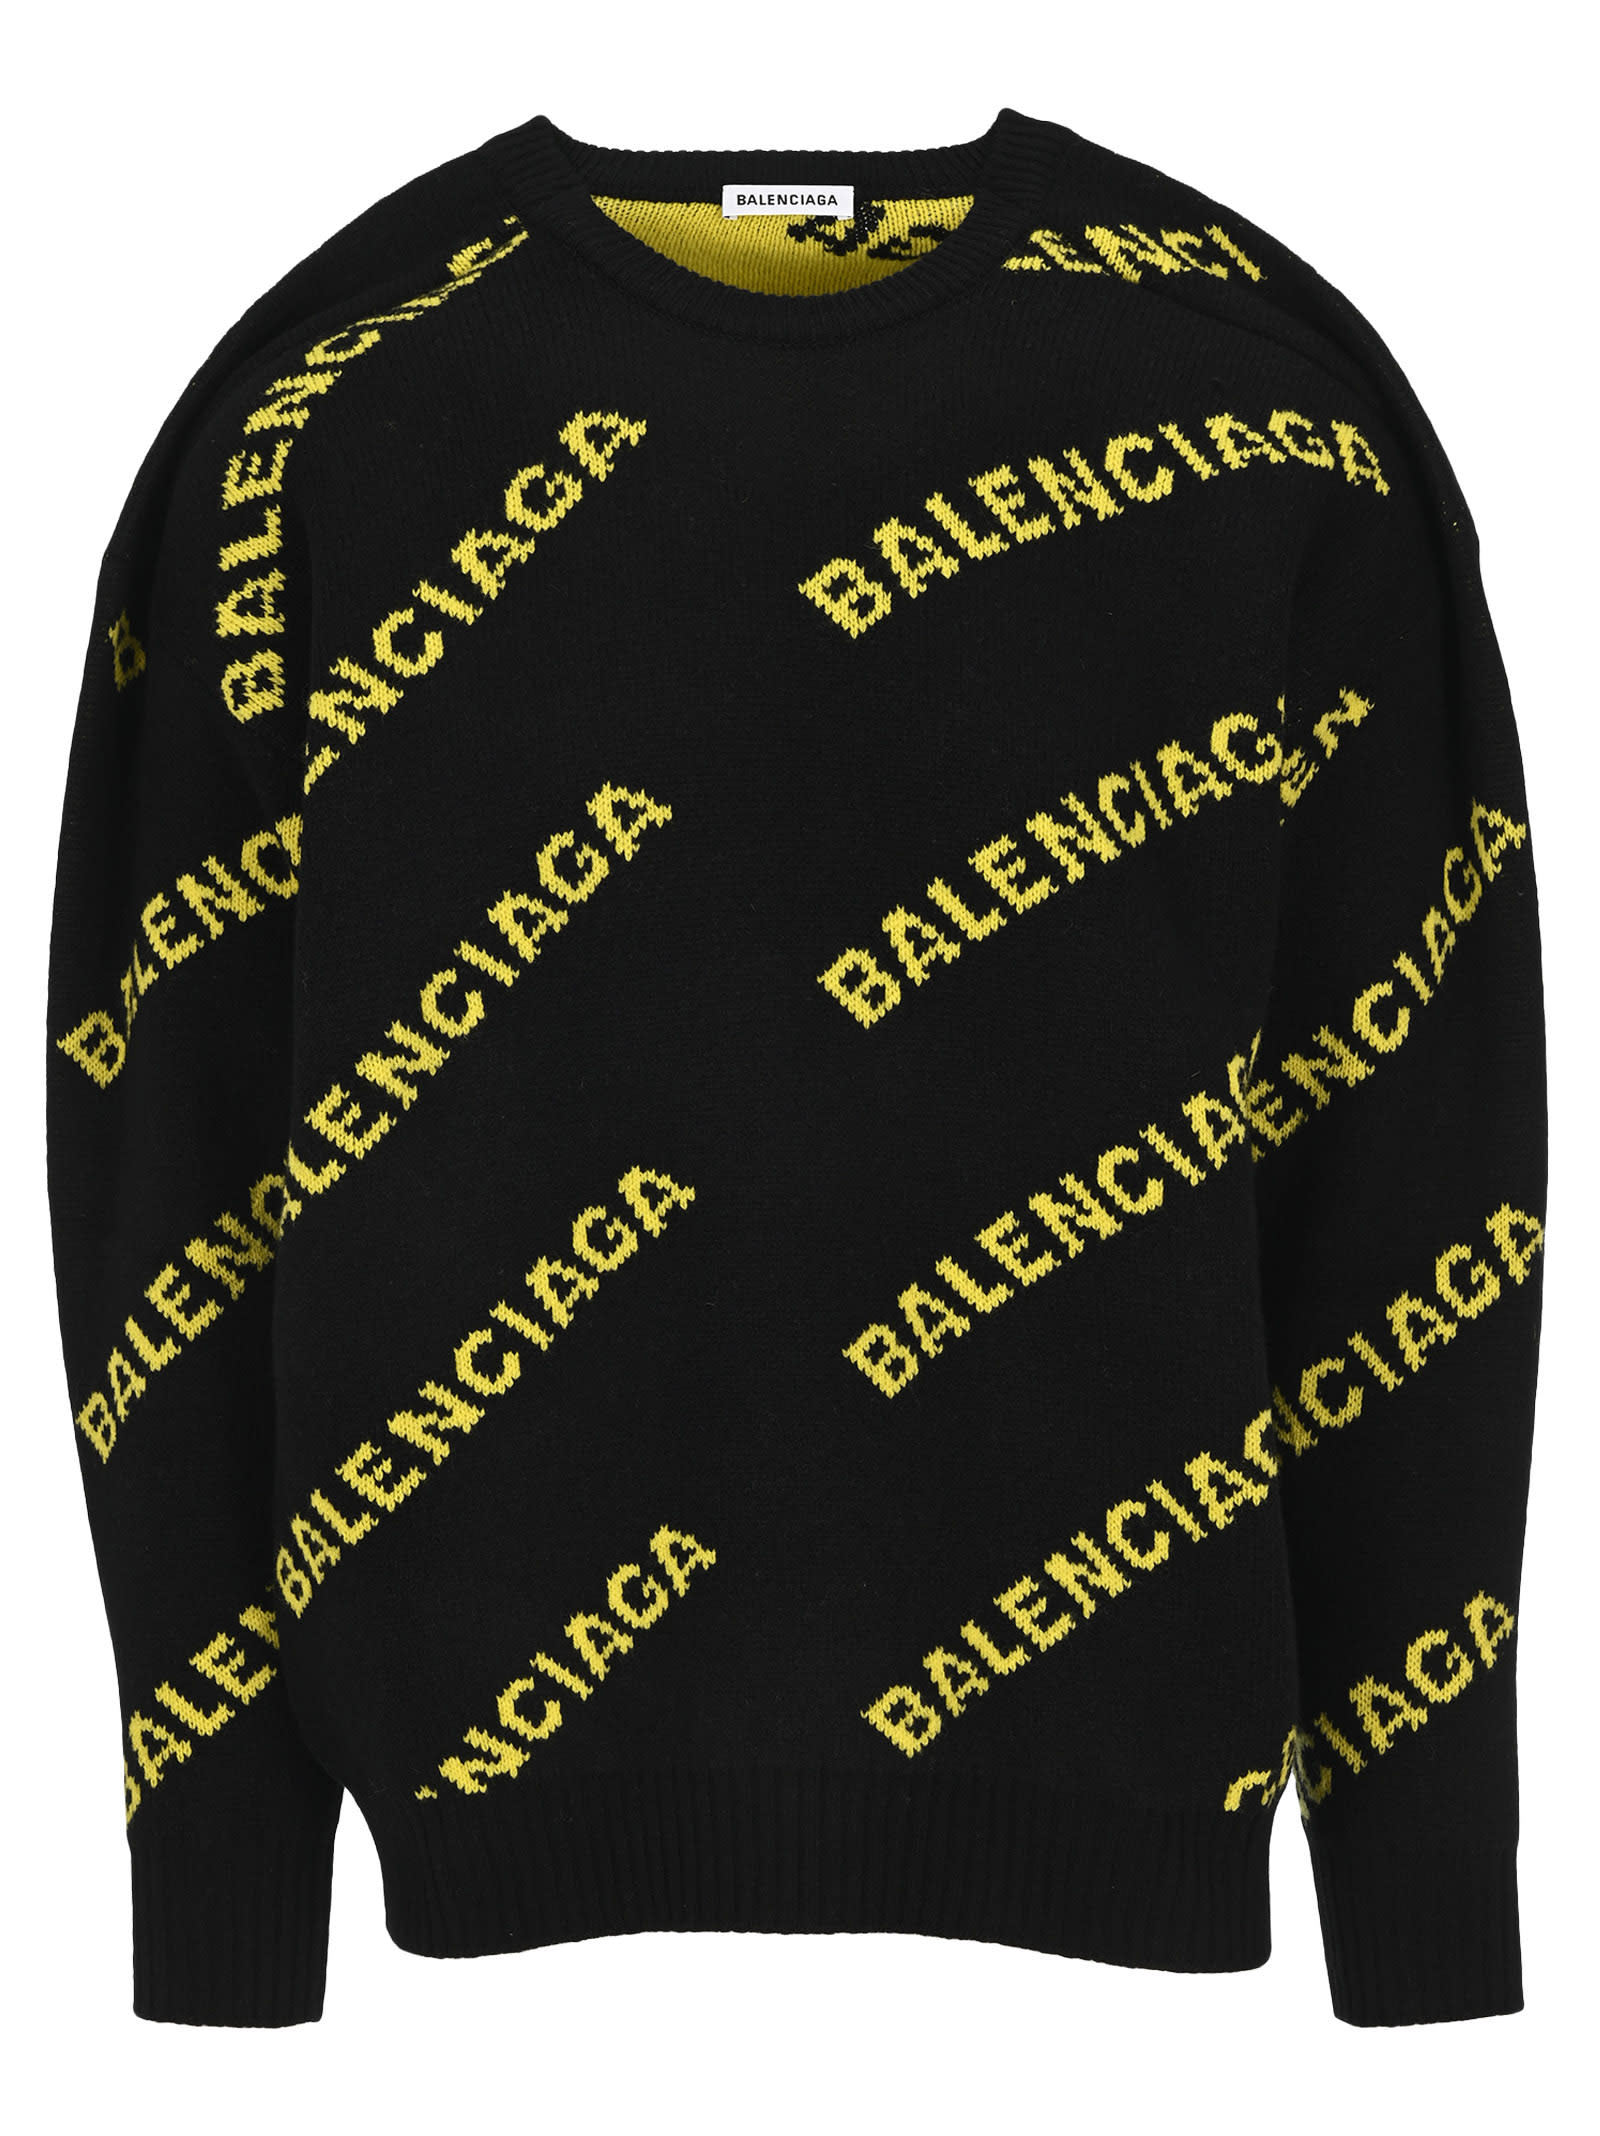 balenciaga sweater for sale